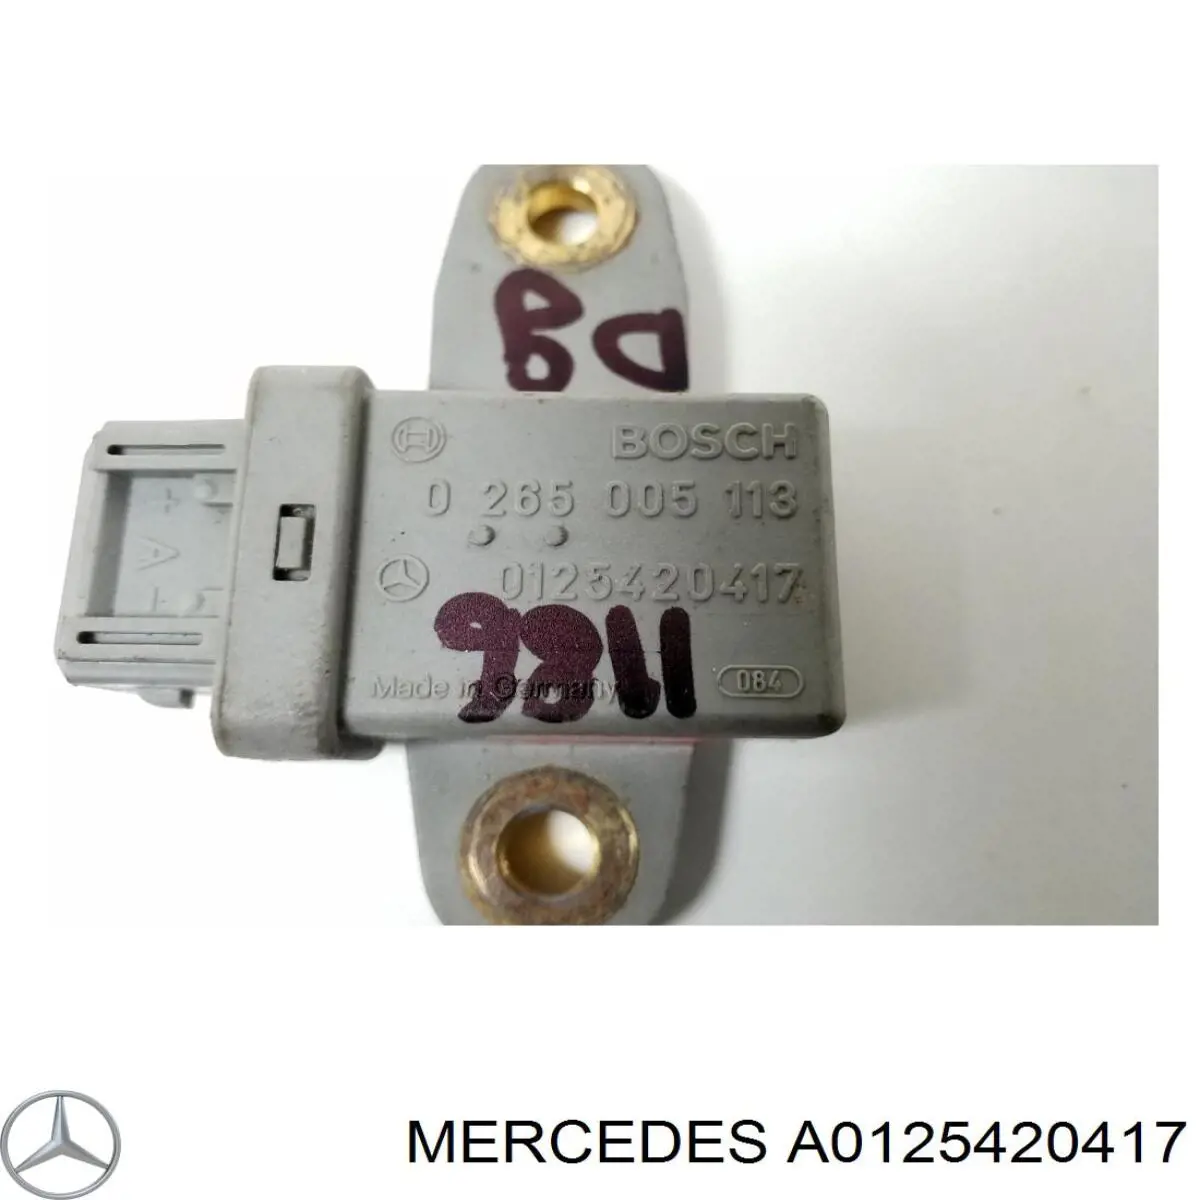 A0125420417 Mercedes sensor de aceleracion longitudinal